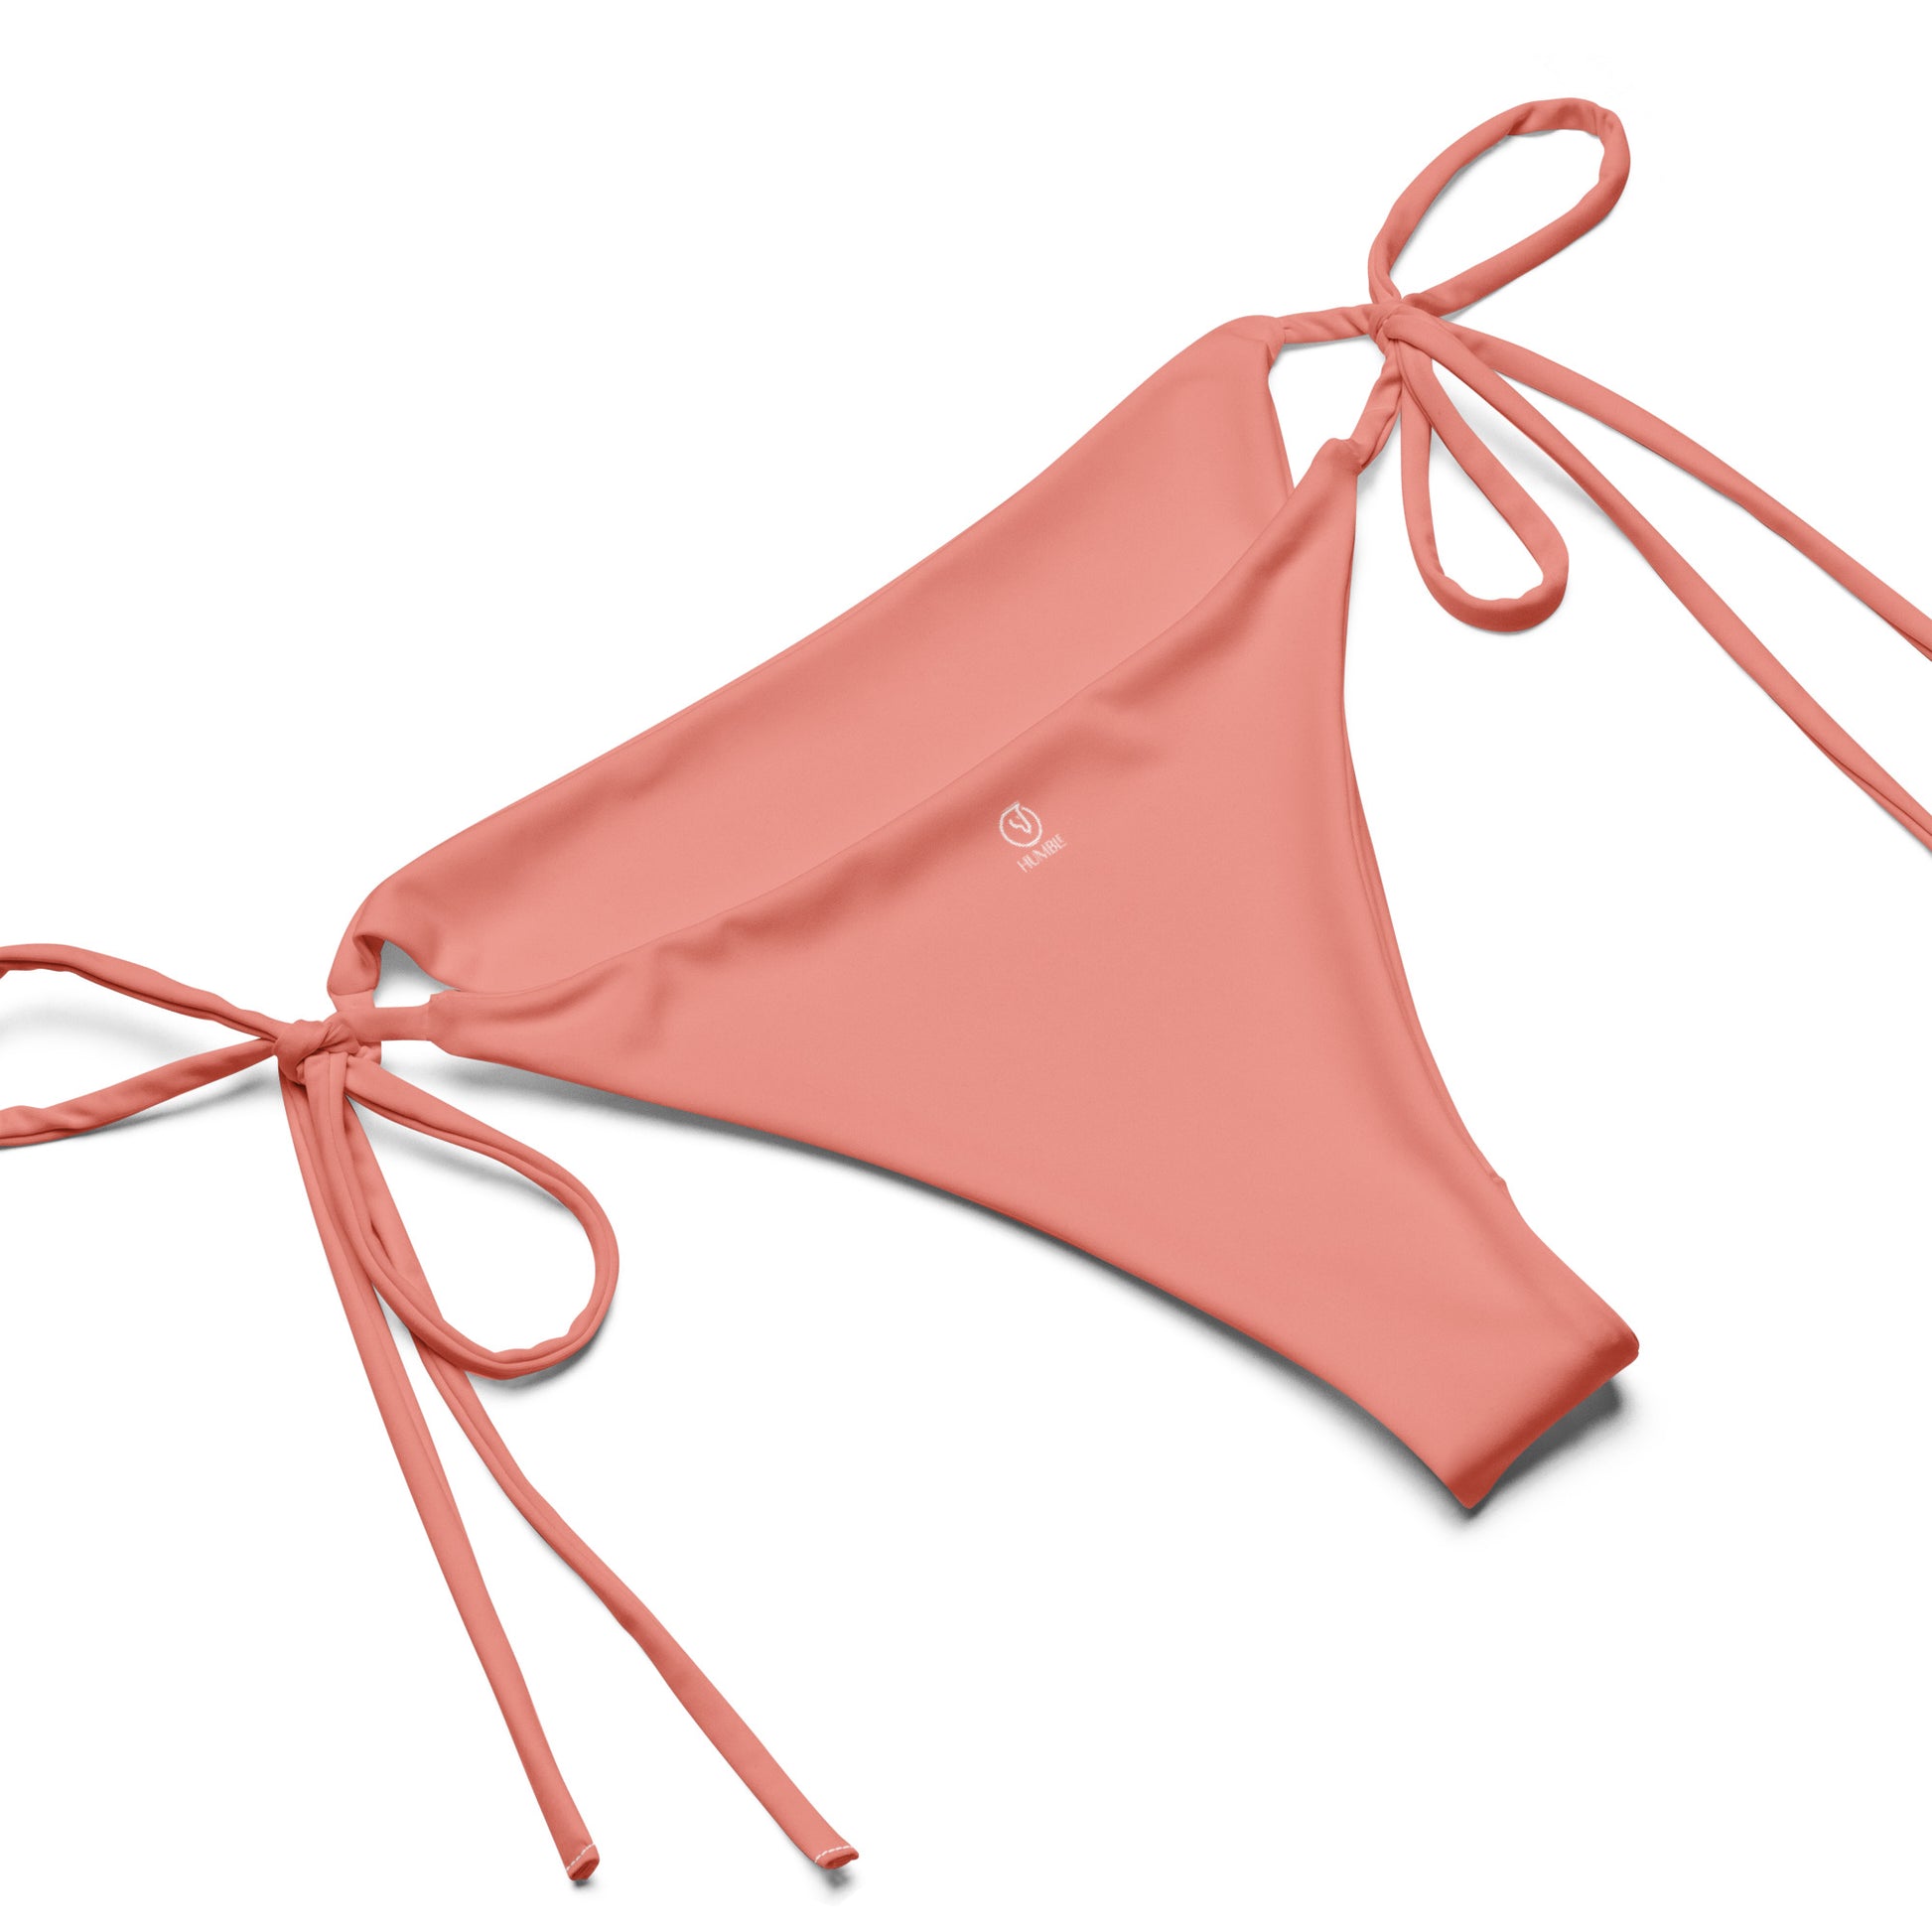 Humble Sportswear, women's Color Match pink plus size string bikini